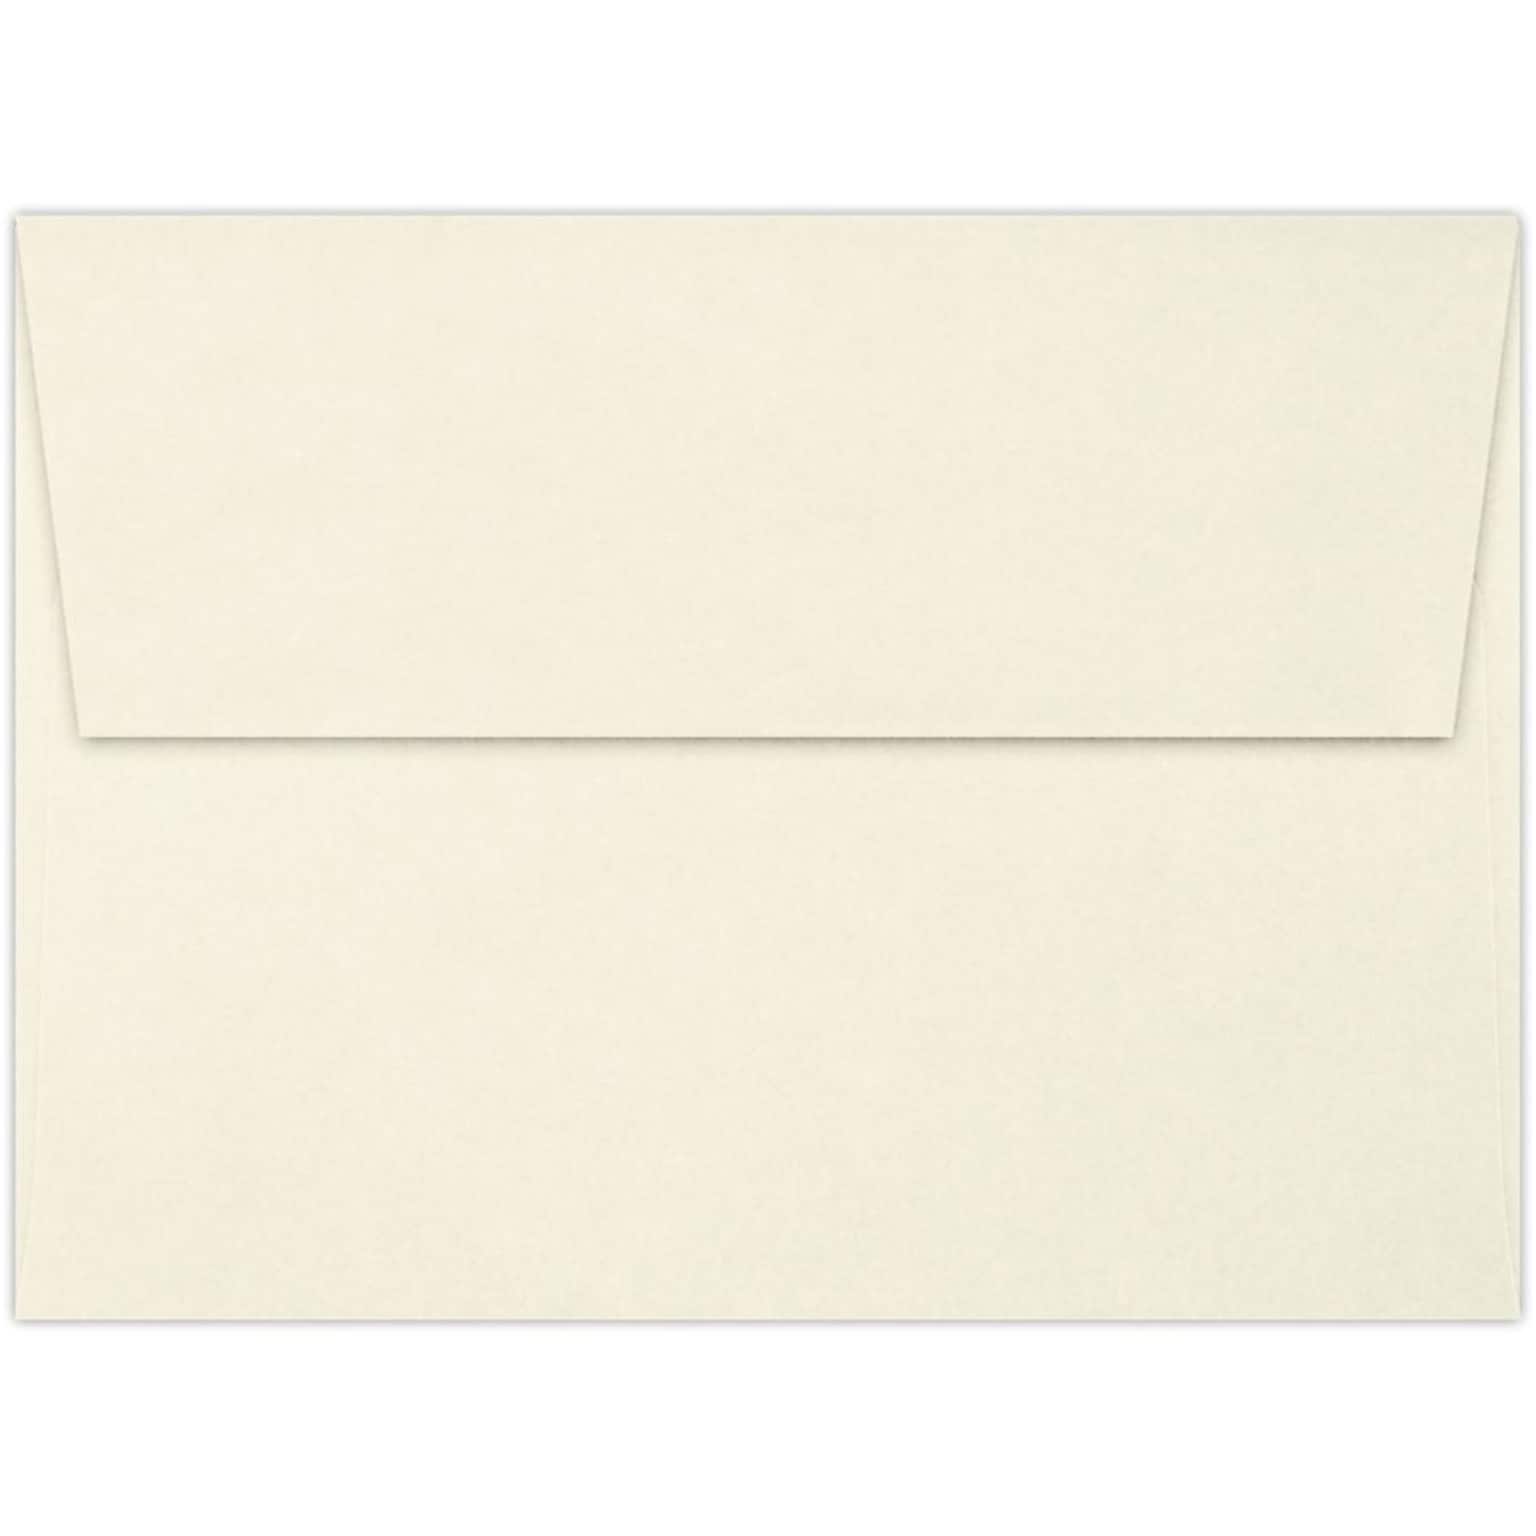 LUX A6 Invitation Envelopes (4 3/4 x 6 1/2) 1000/Pack, 70lb. Classic Linen® Natural White (875-70NWLI-1000)